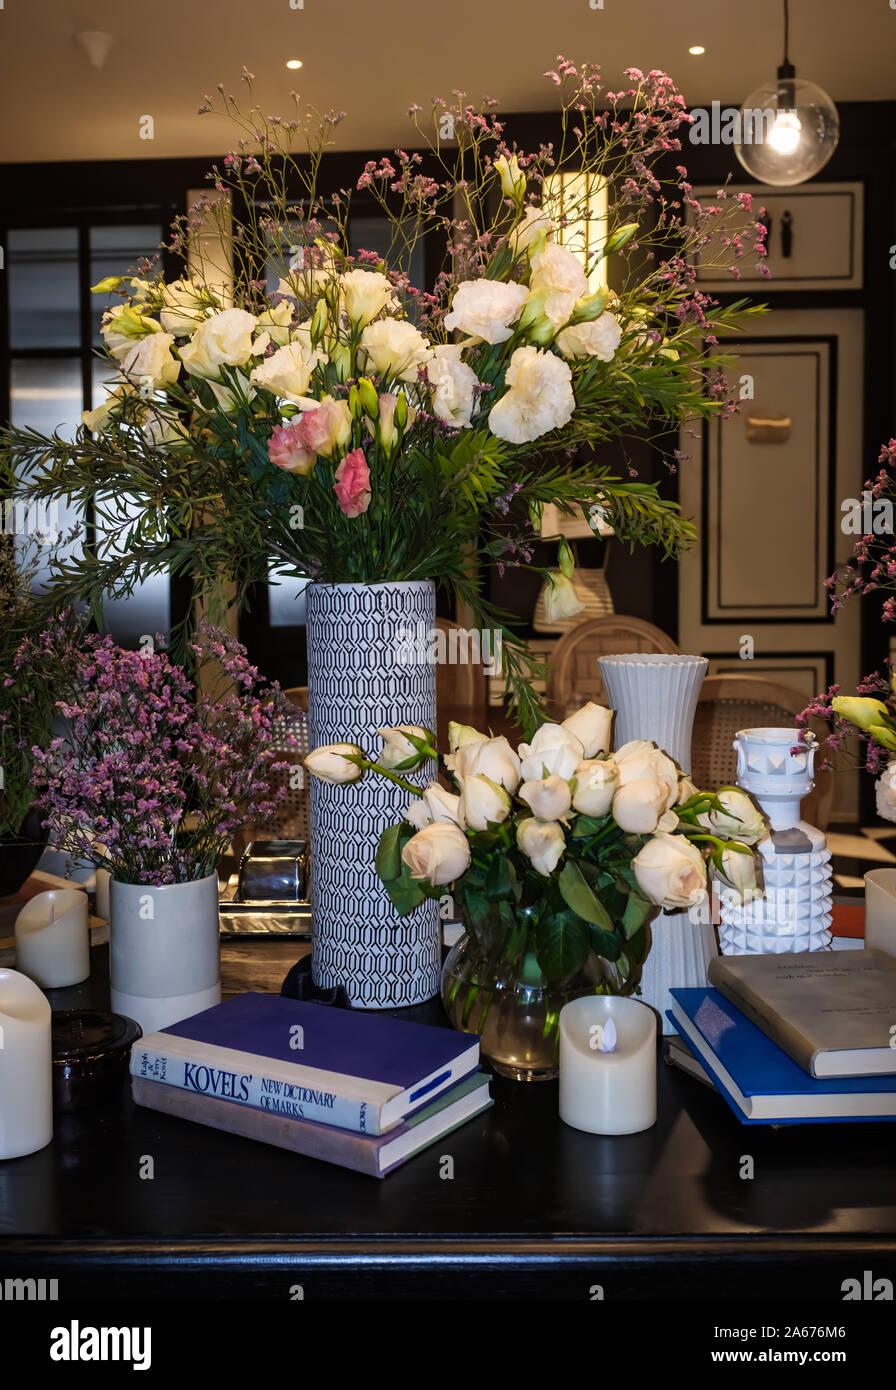 Bangkok,Thailand-03 APR 2018: Vintage flower vase display on the table Stock Photo